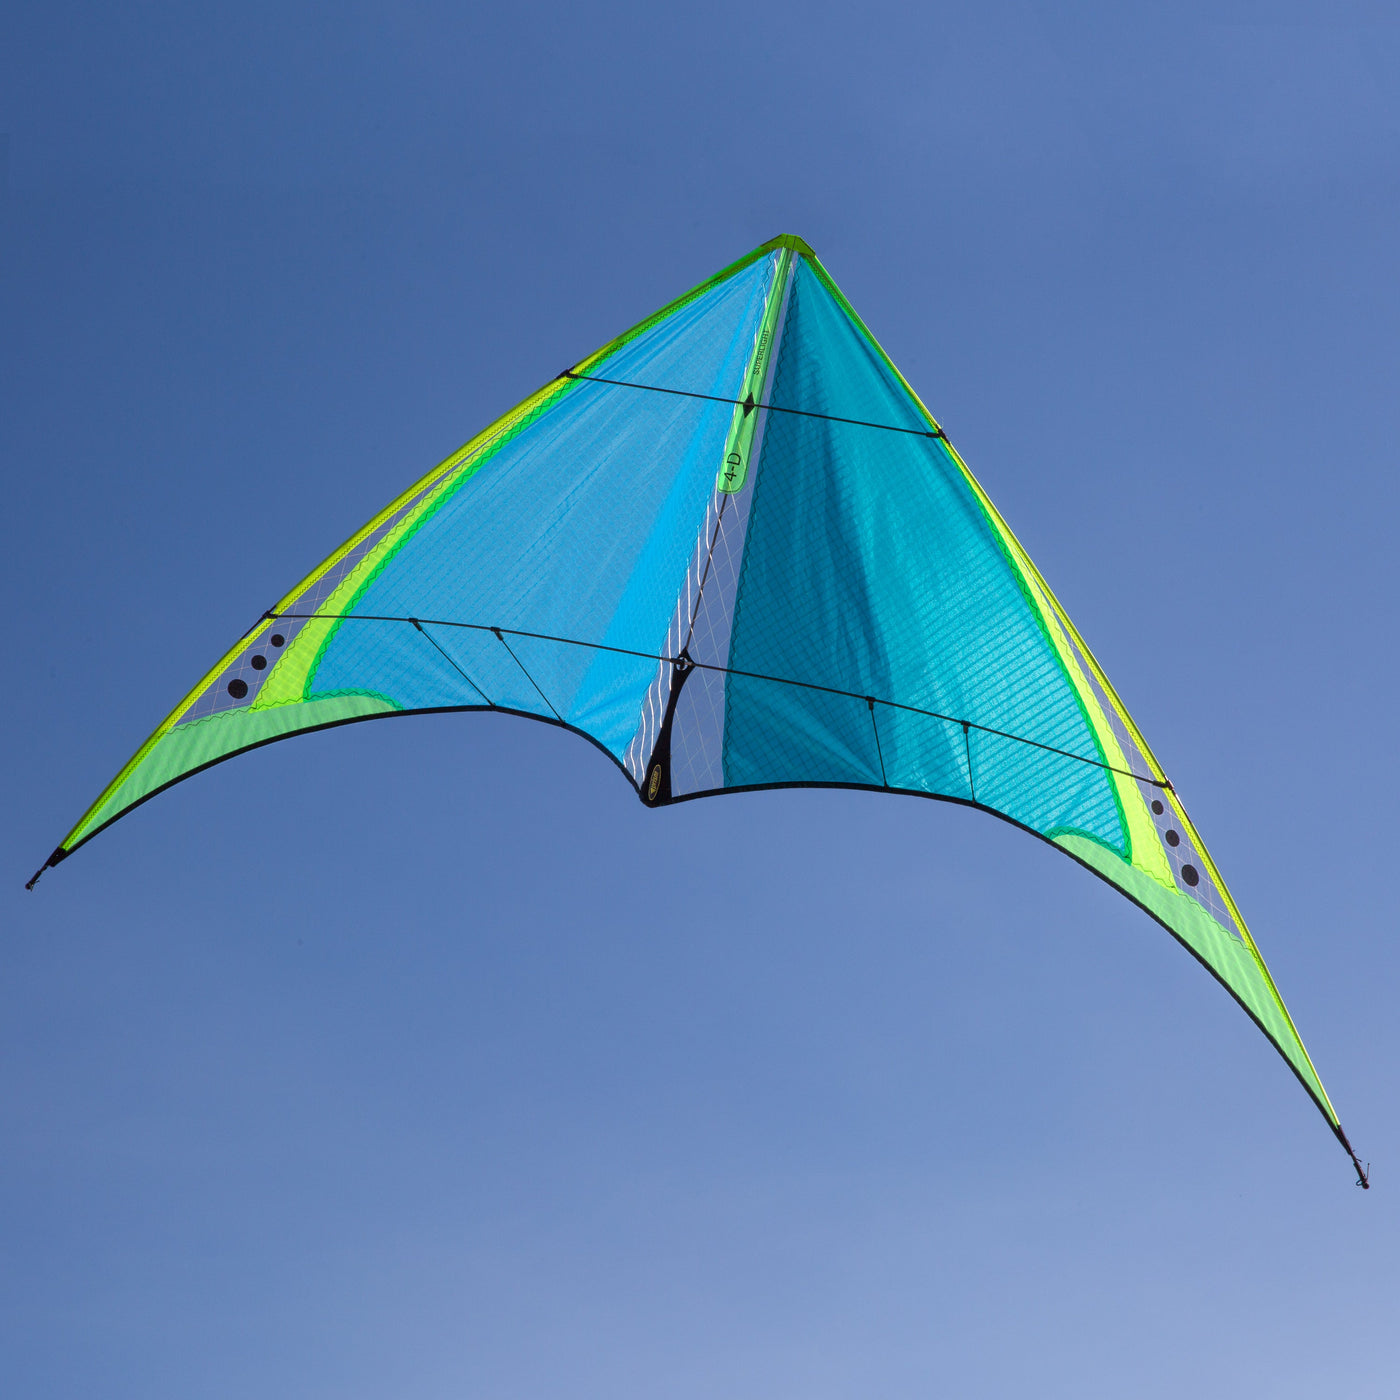 Seafoam 4D Superlight stunt kite in sky